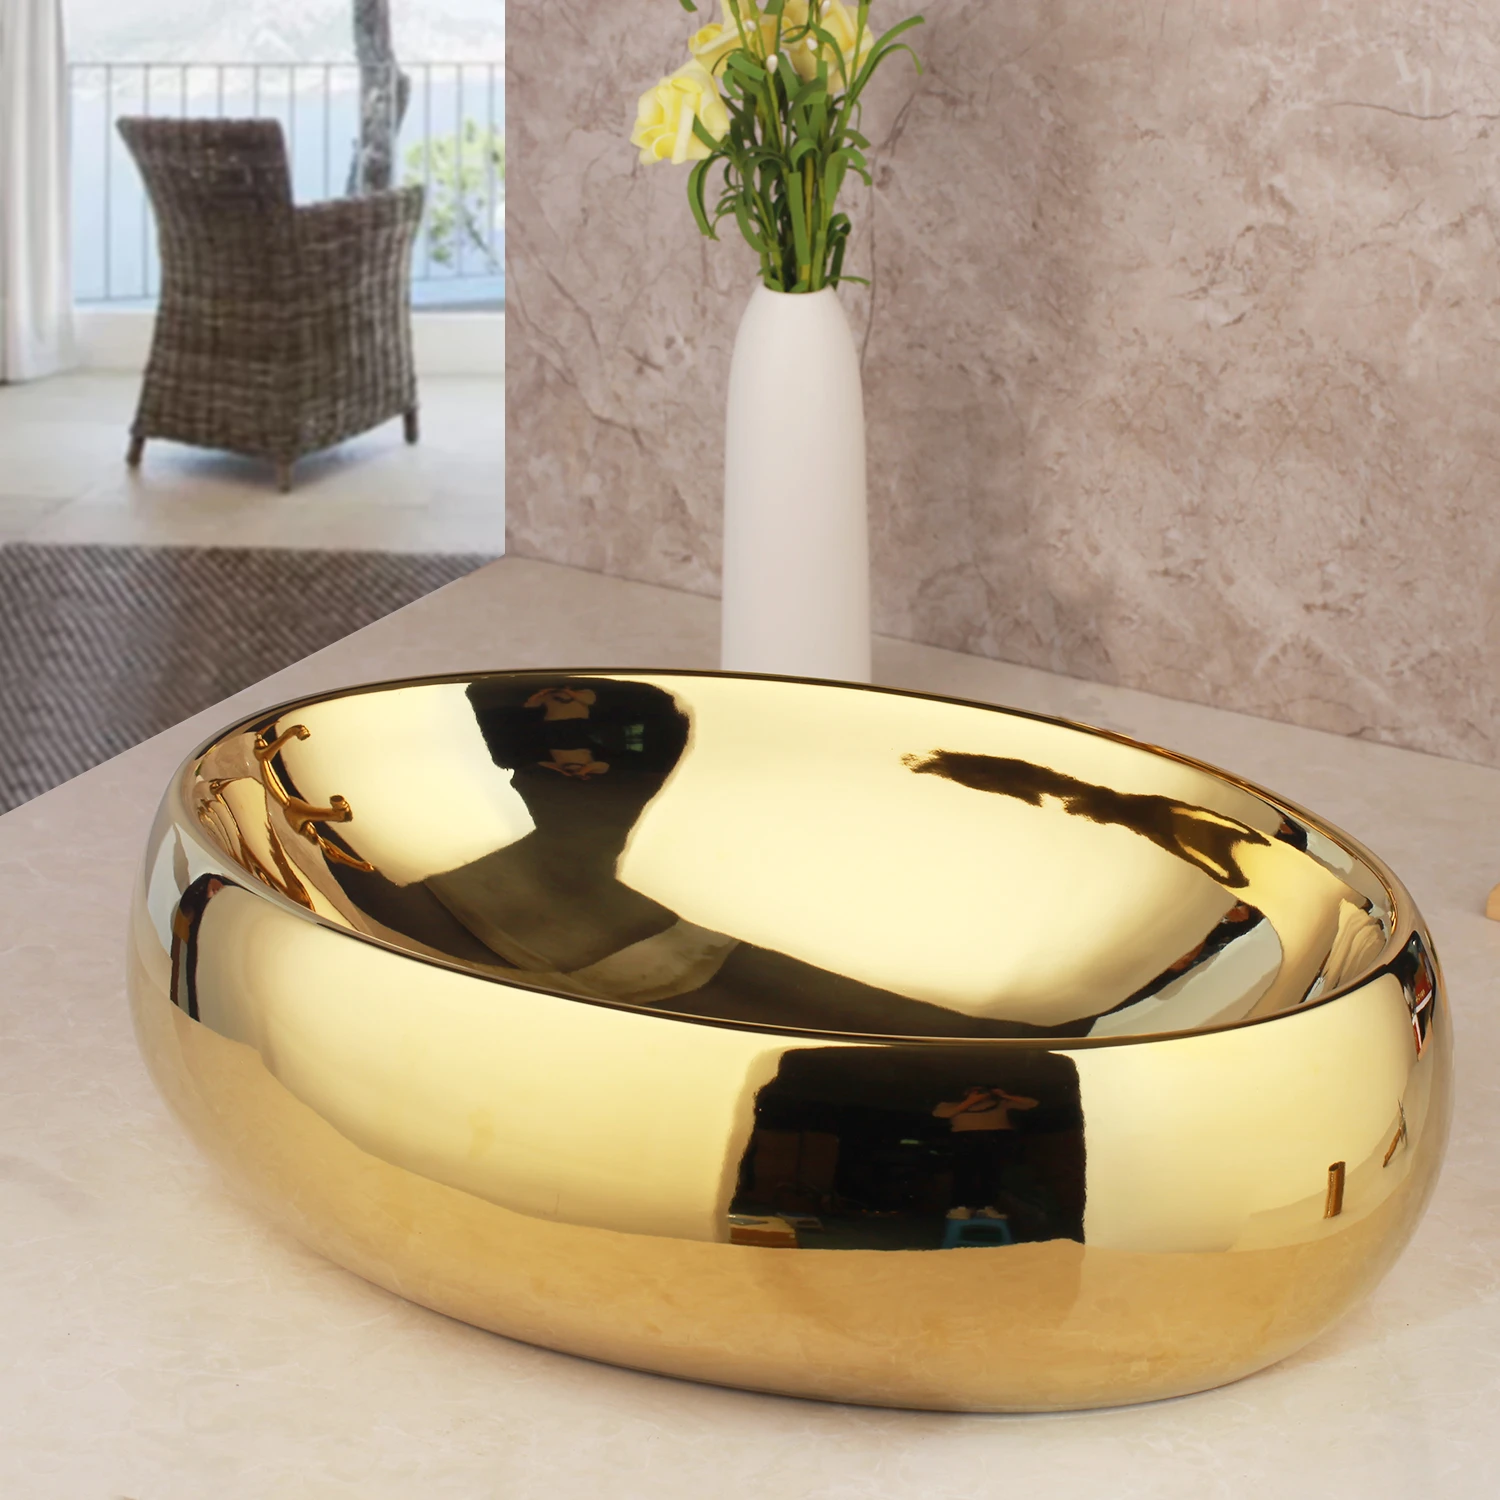 Basin Sinks Waterfall Gold Mixer Faucet + Oval Gold Ceramic Basin Sink Bowl Pop Drain Set